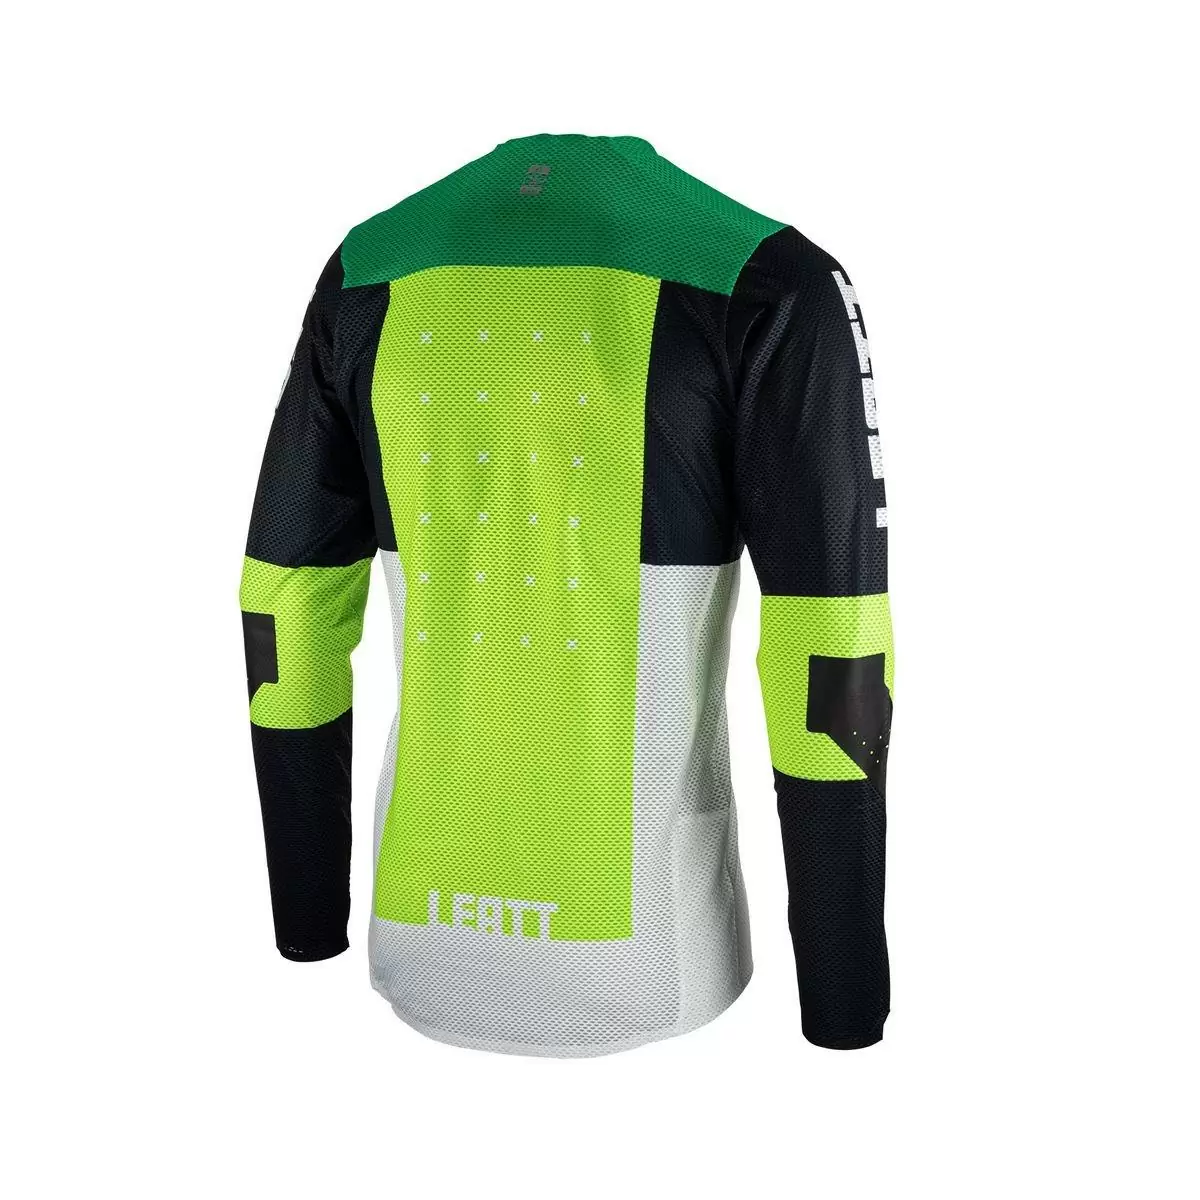 Gravity 4.0 mangas compridas MTB jersey verde/preto tamanho L #1